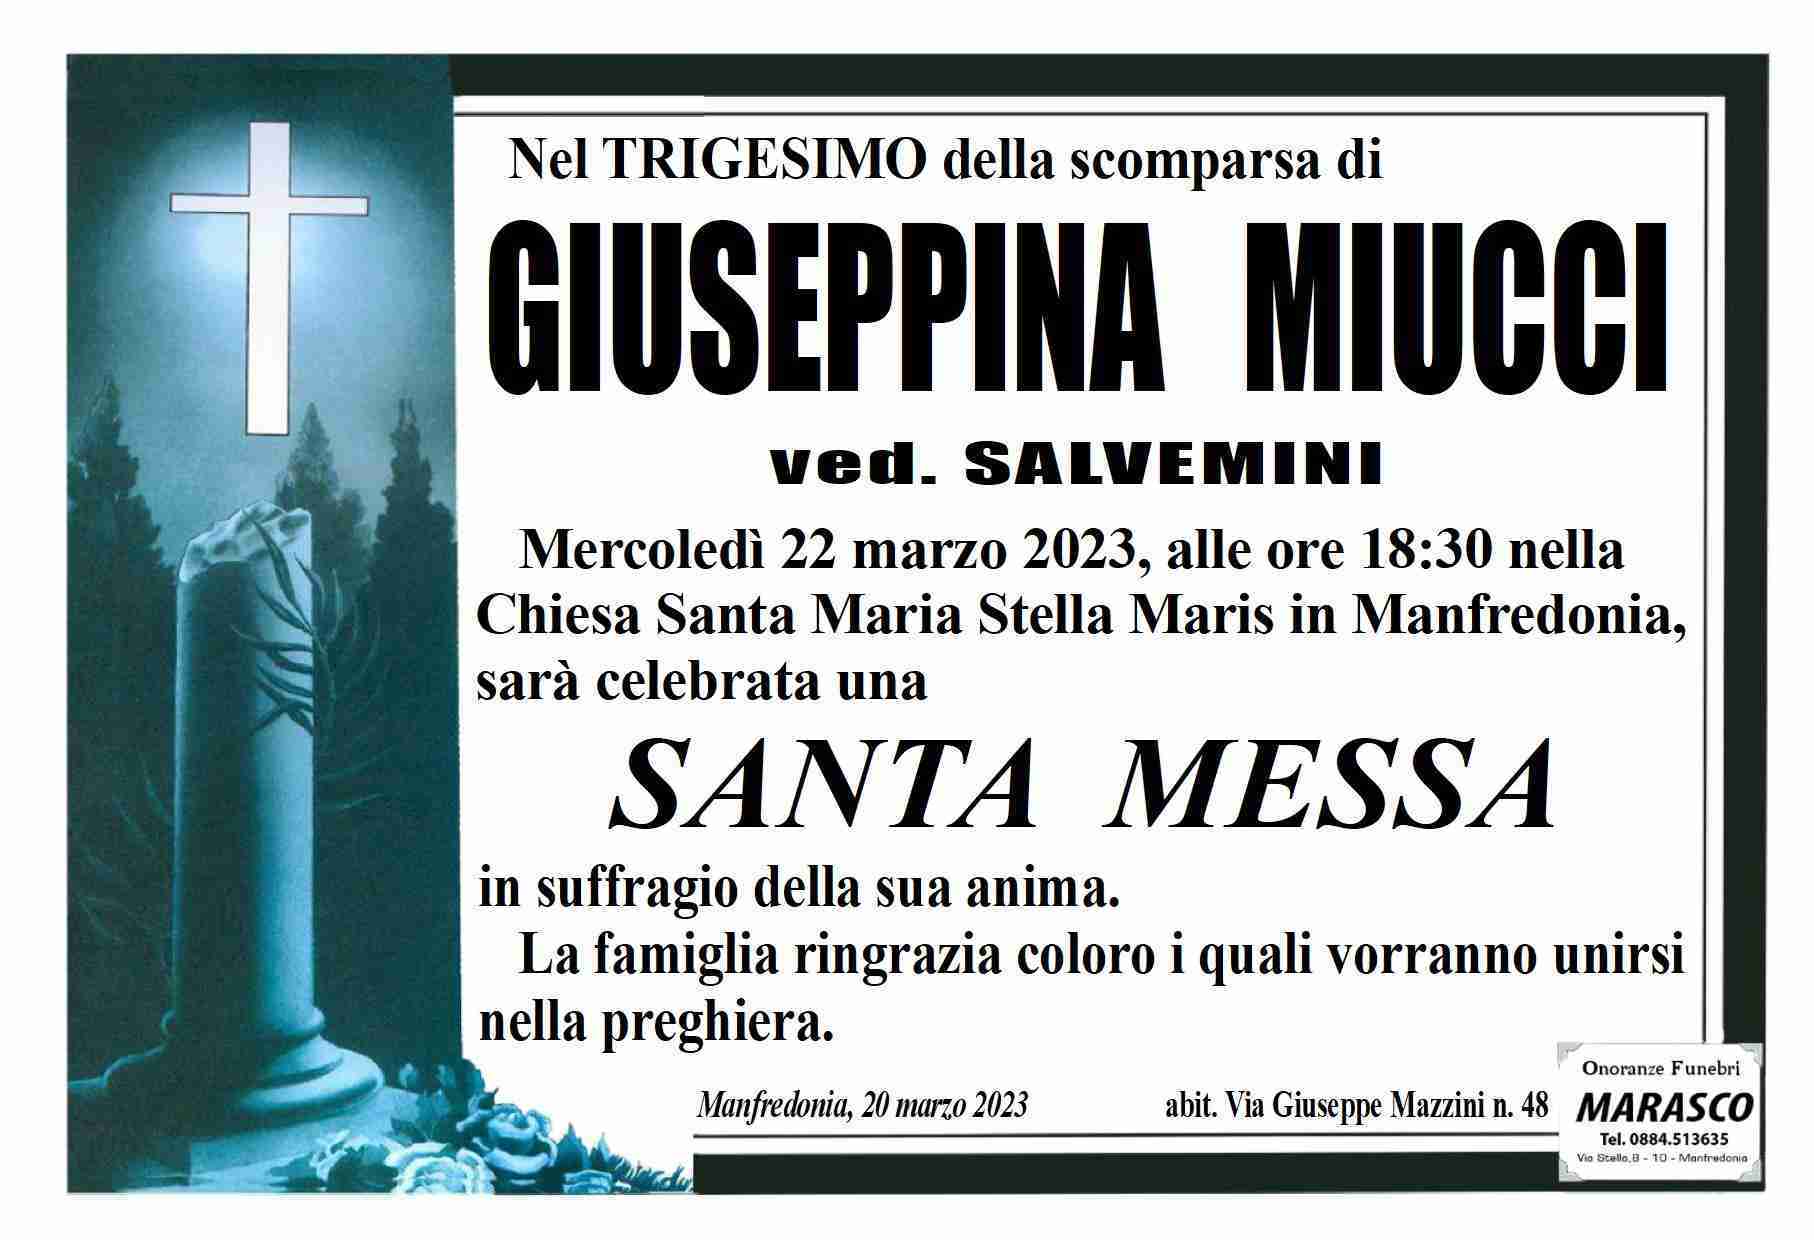 Giuseppina Miucci